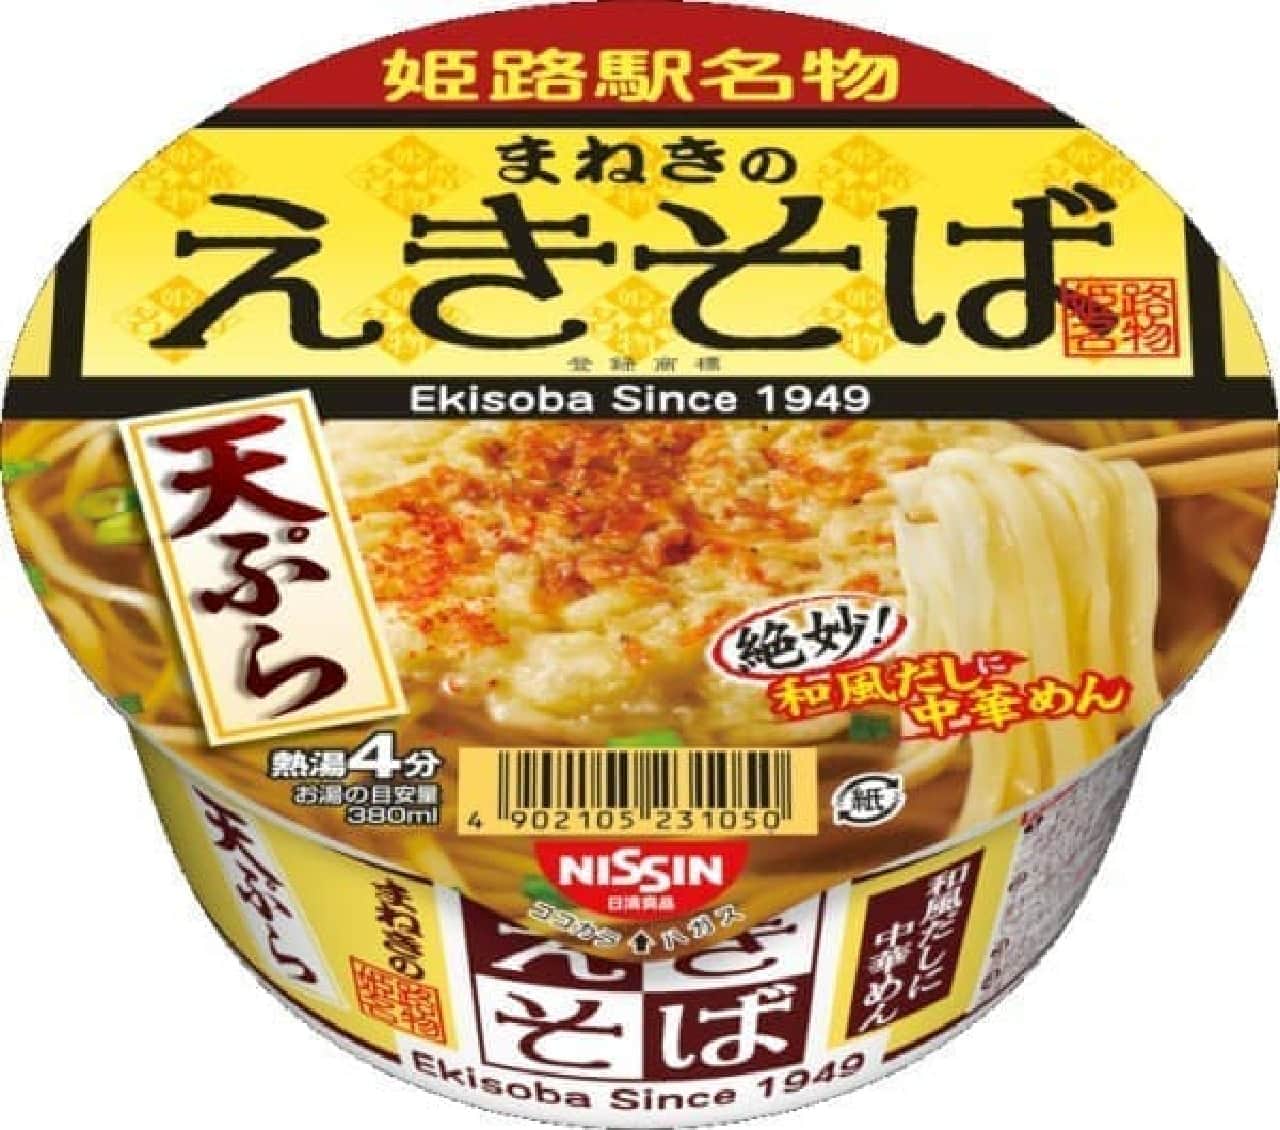 Nissin Foods "Maneki no Ekisoba Tempura"